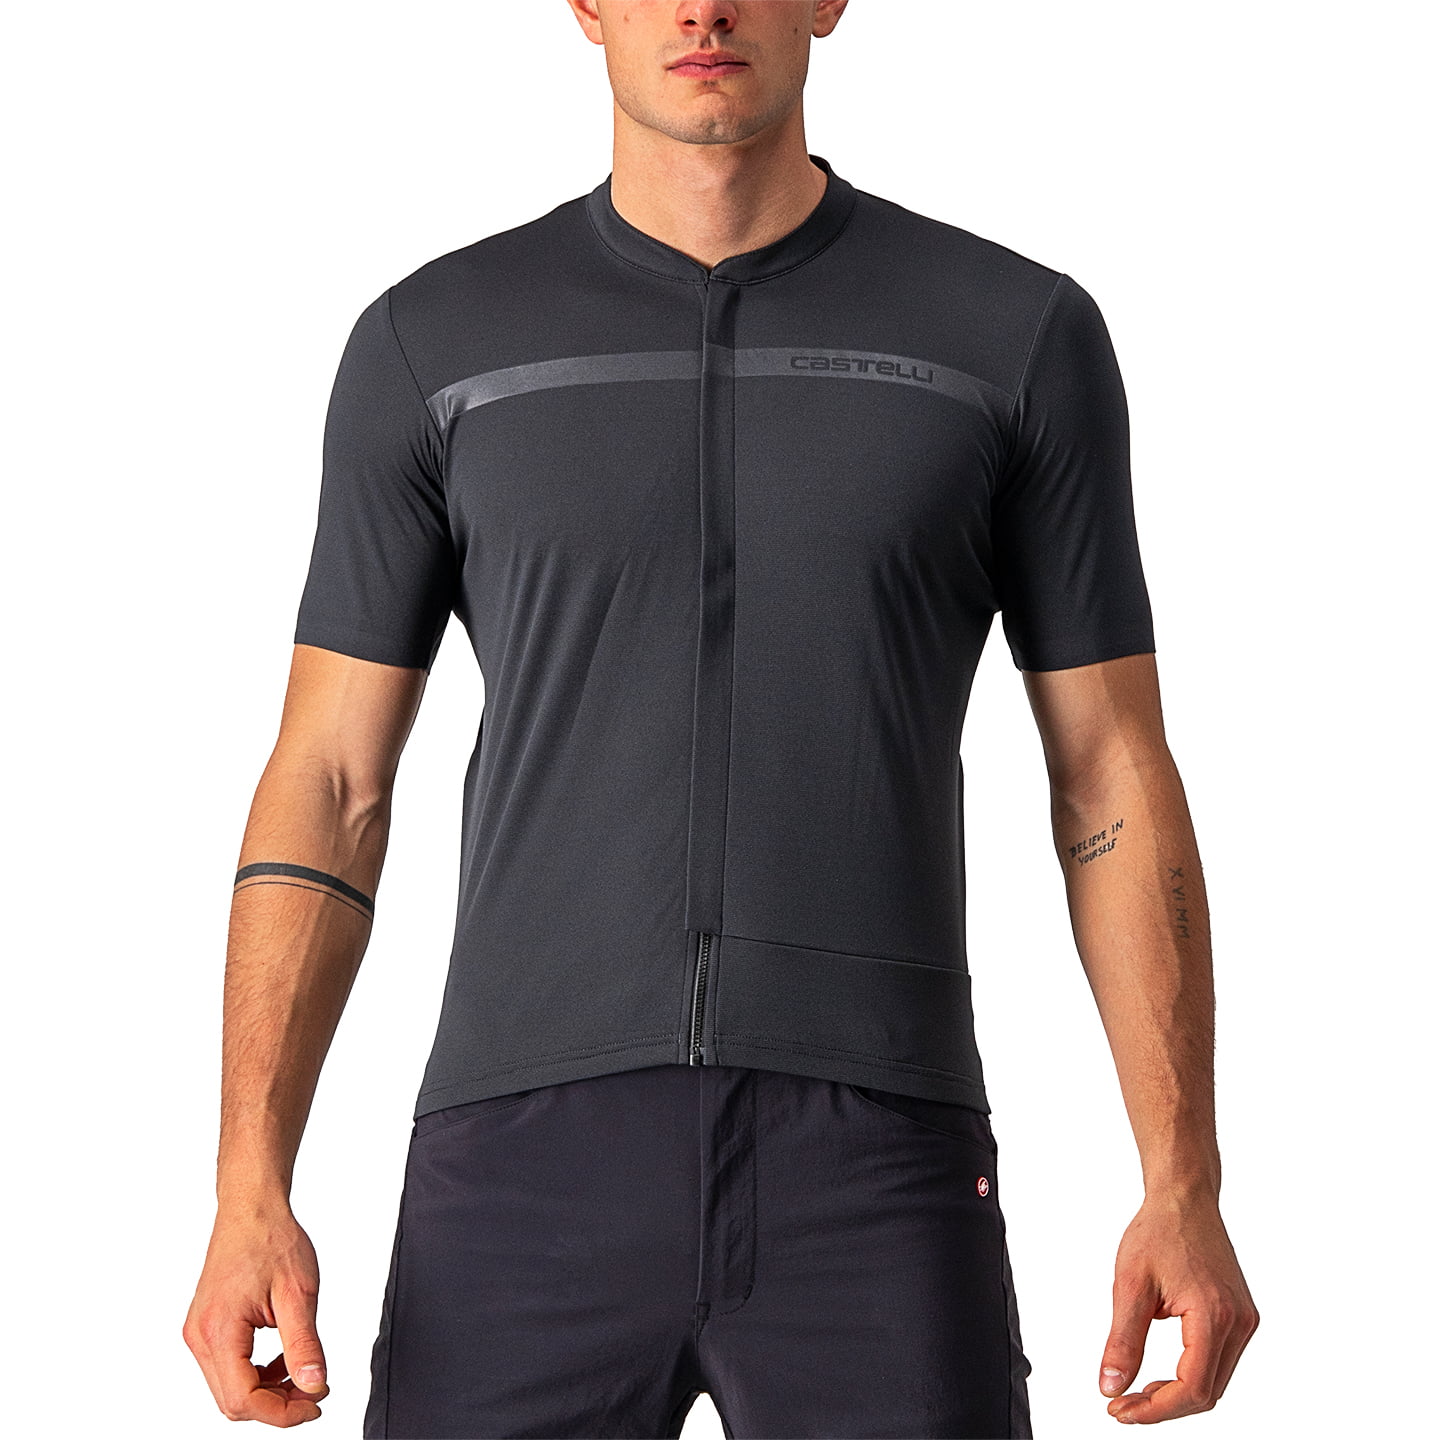 Unlimited Allround Short Sleeve Jersey Short Sleeve Jersey, for men, size M, Cycling jersey, Cycling clothing